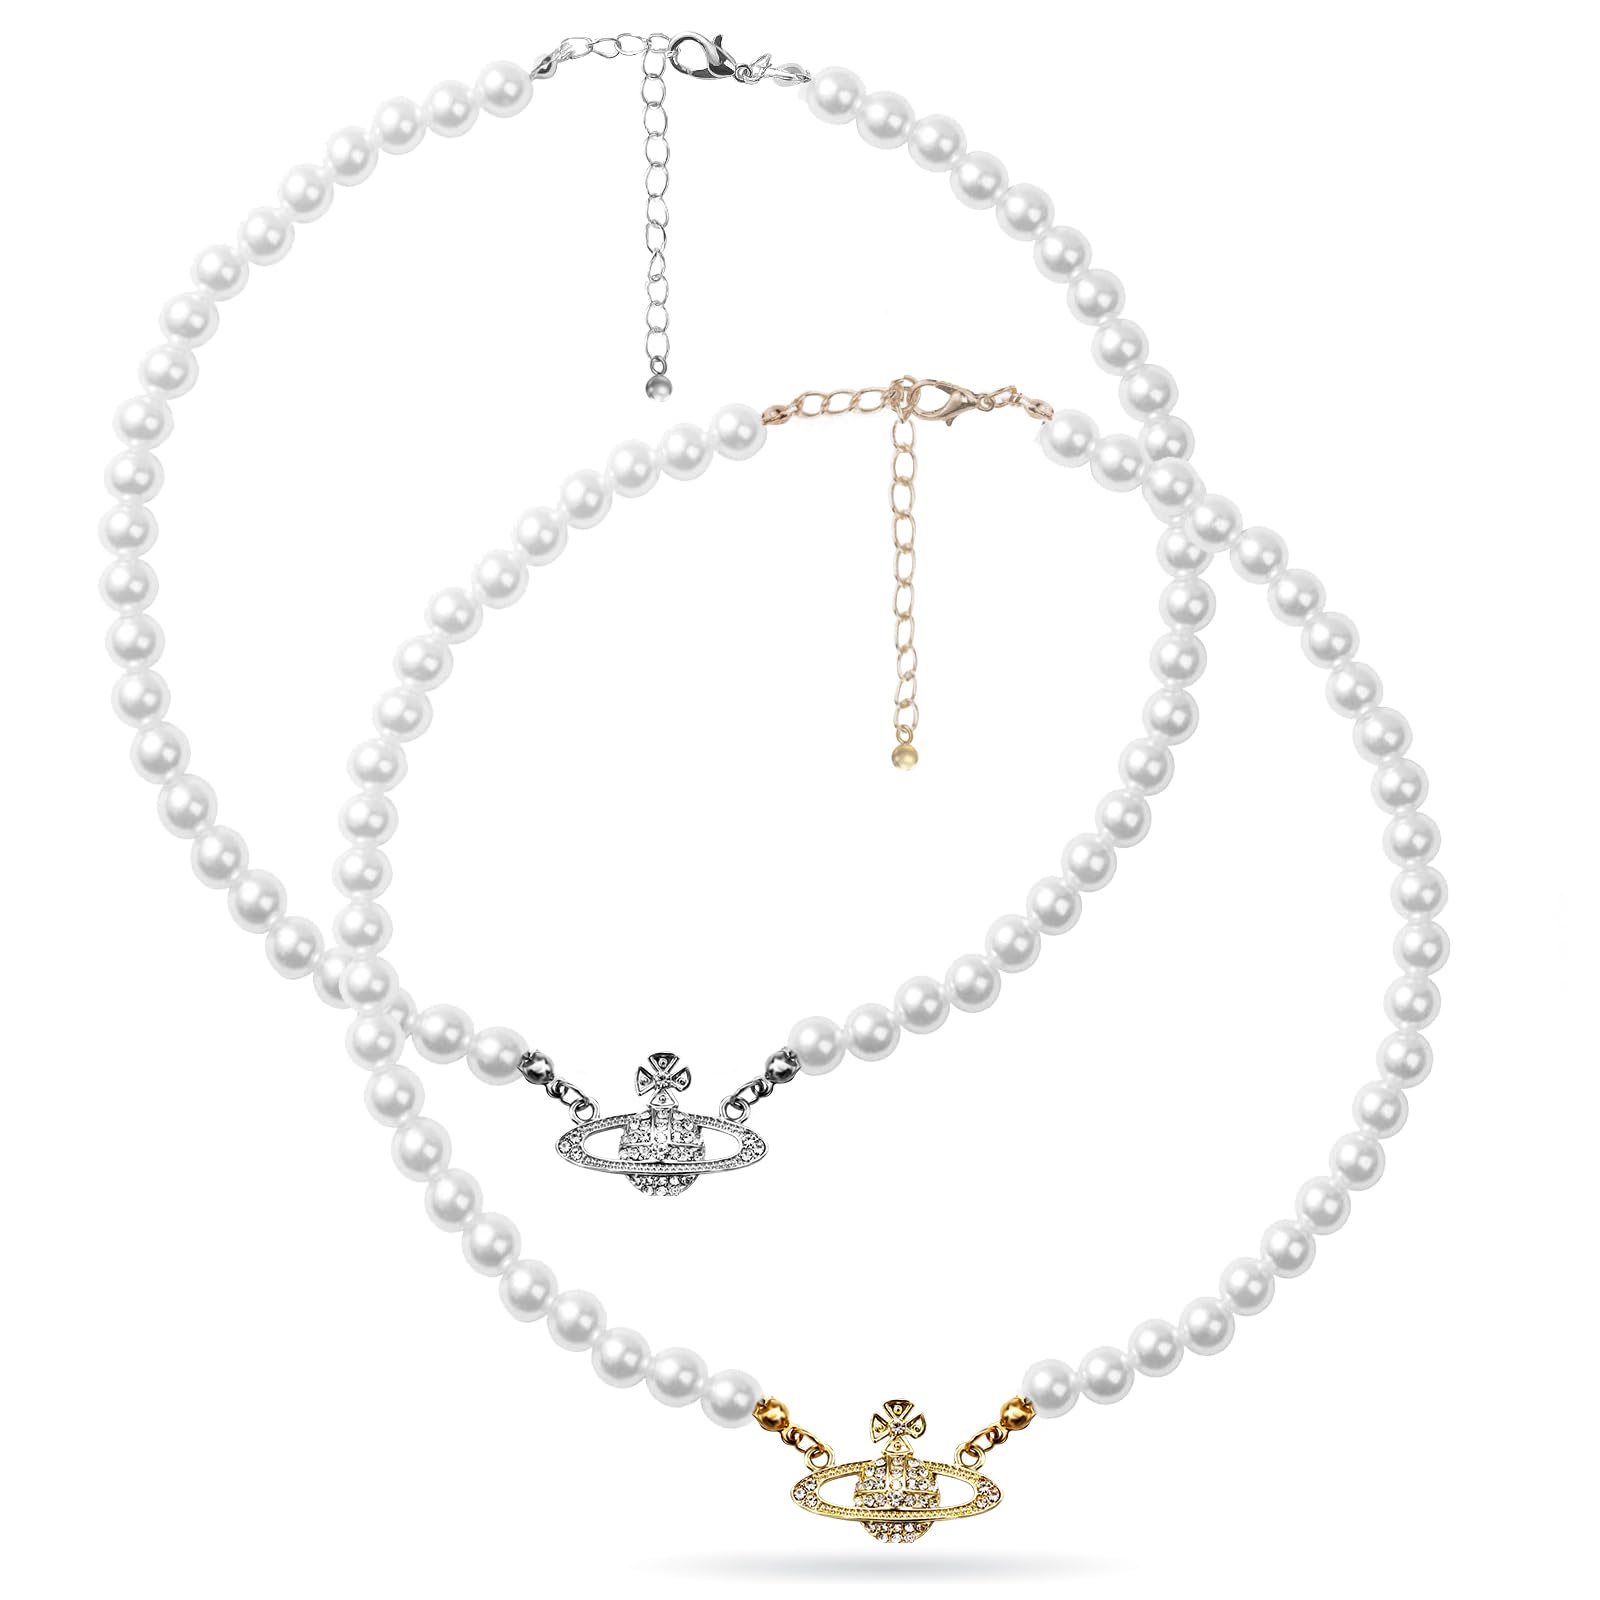 2PCS Saturn Artificial Rhinestone Pearl Necklace Set White Crystal Jewelry Lady Charm Lady Girlfriend Wedding Birthday Anniversary